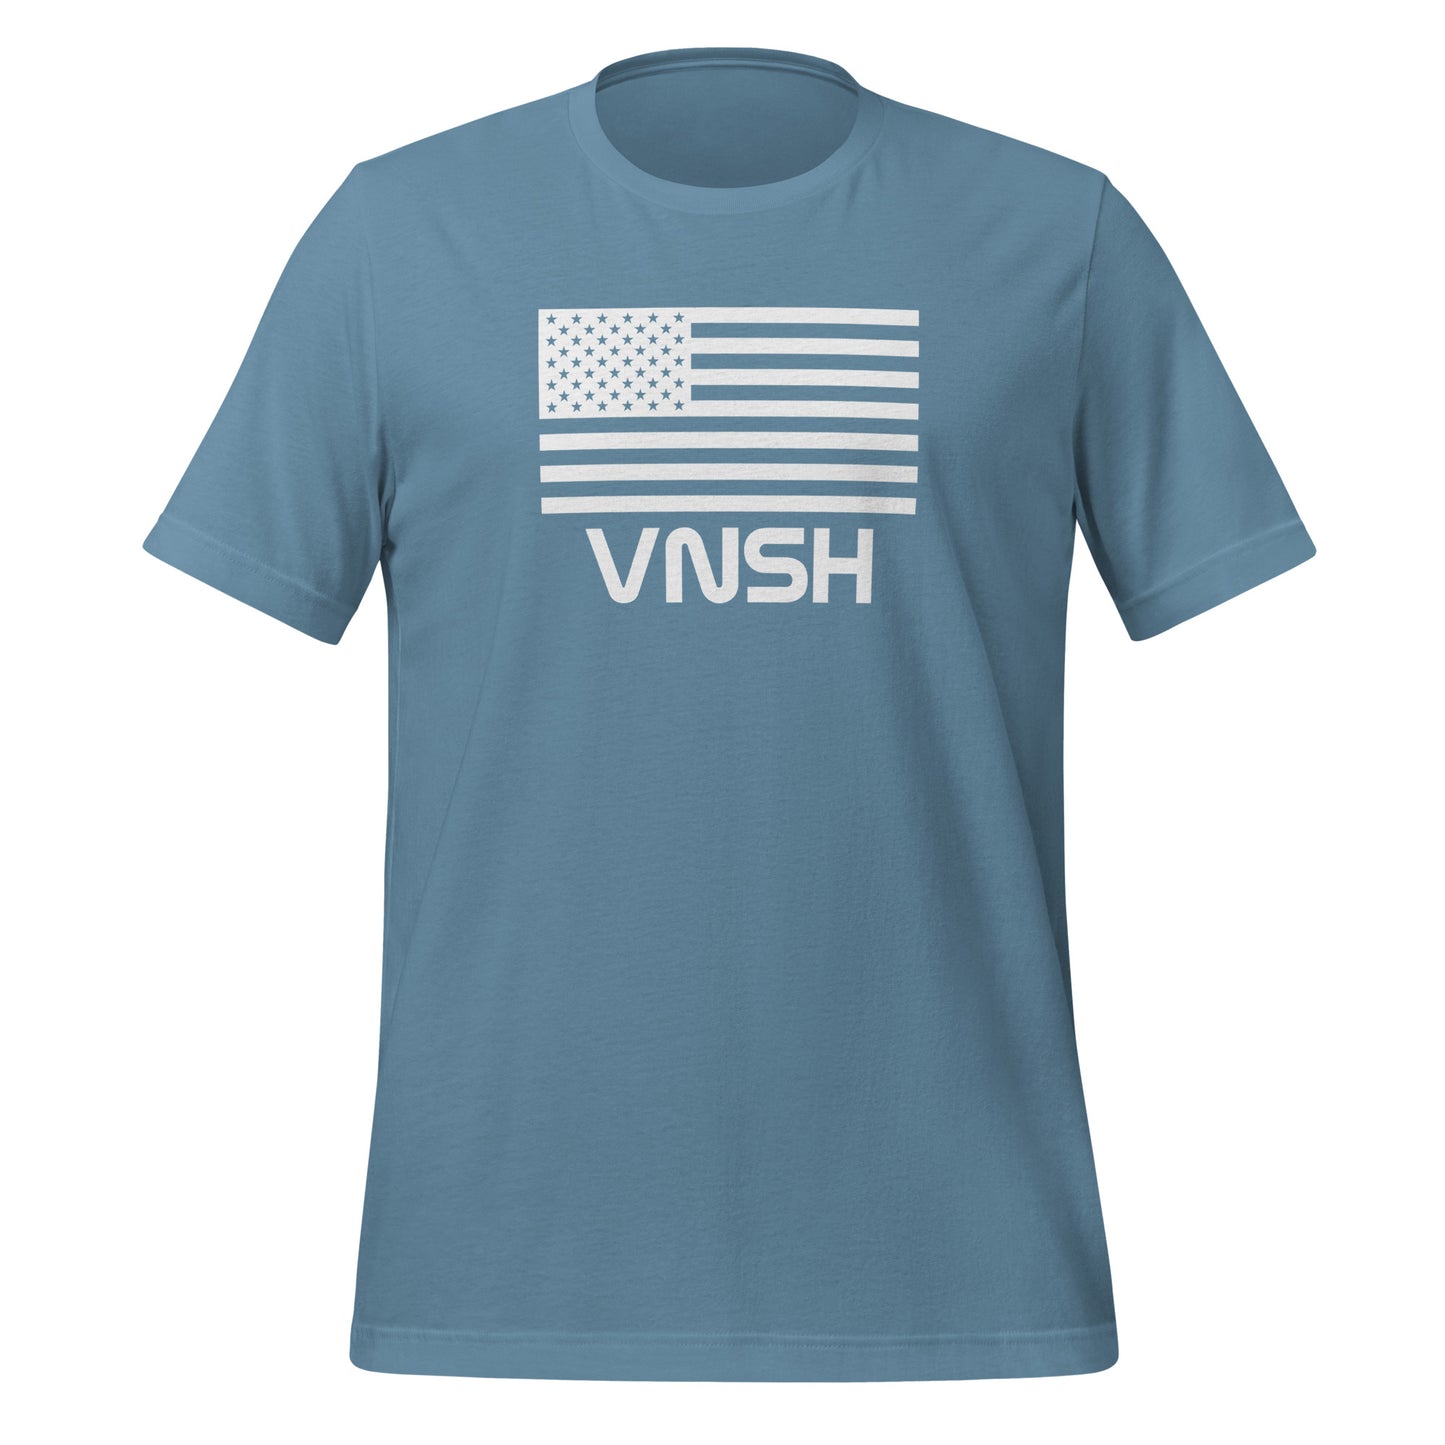 USA VNSH Logo T-shirt